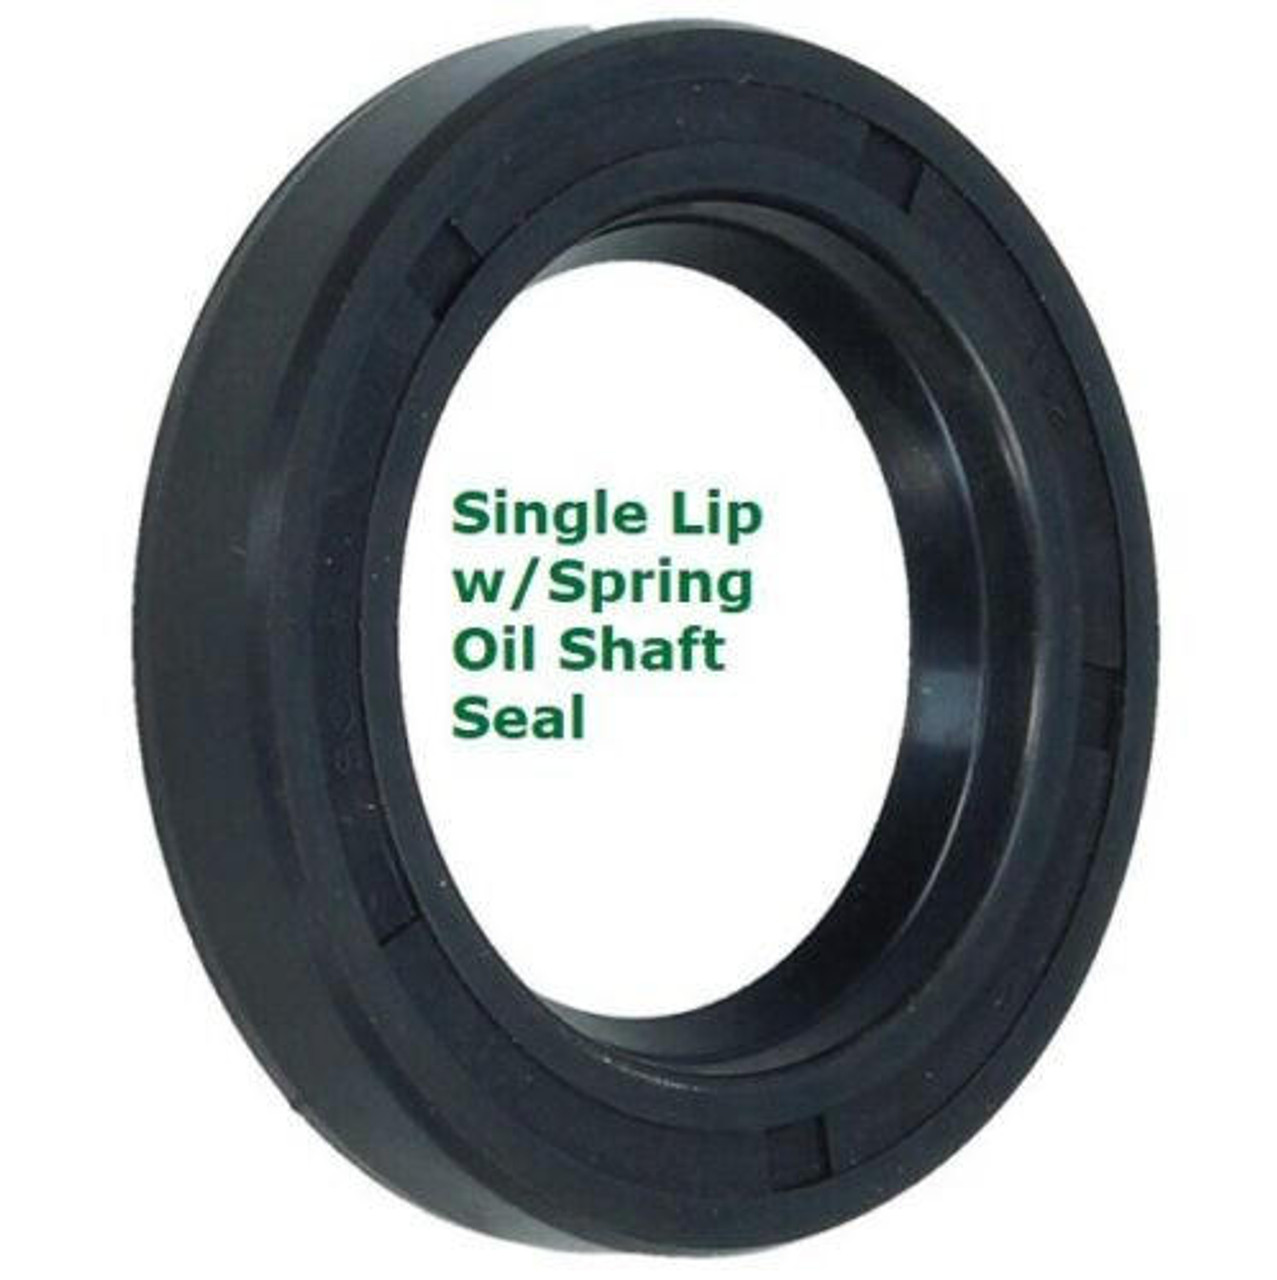 Metric Oil Shaft Seal 25 x 38 x 7mm Single Lip Ref# CR692309 Price for 1 pc